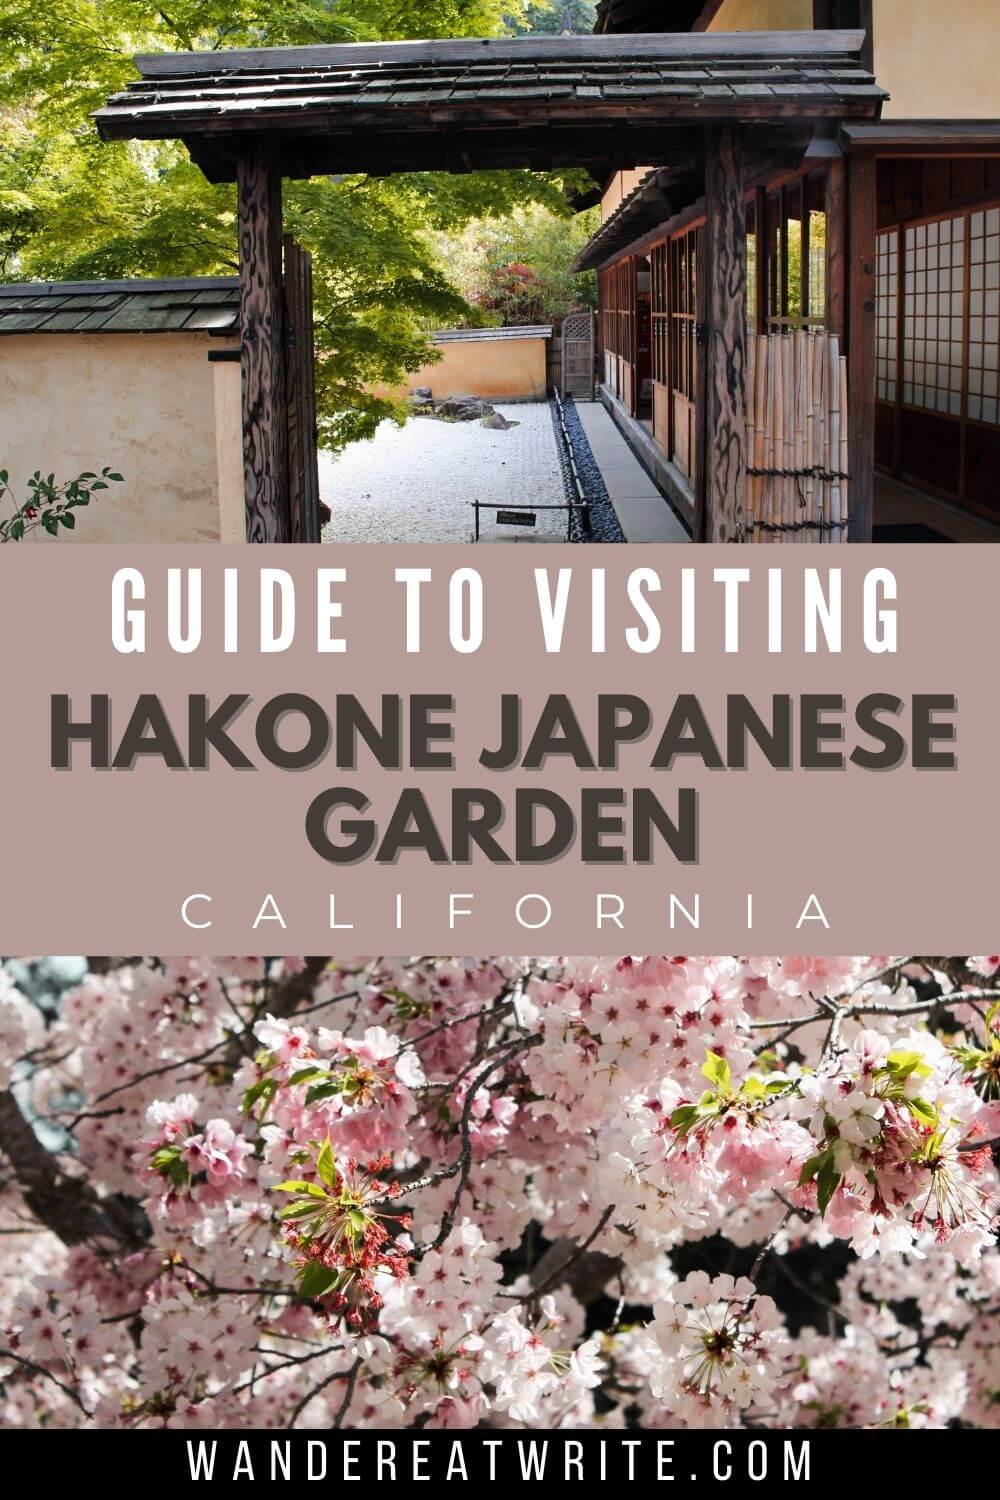 Text: guide to visiting hakone japanese garden california; photos: entrance to japanese rock garden and cherry blossoms